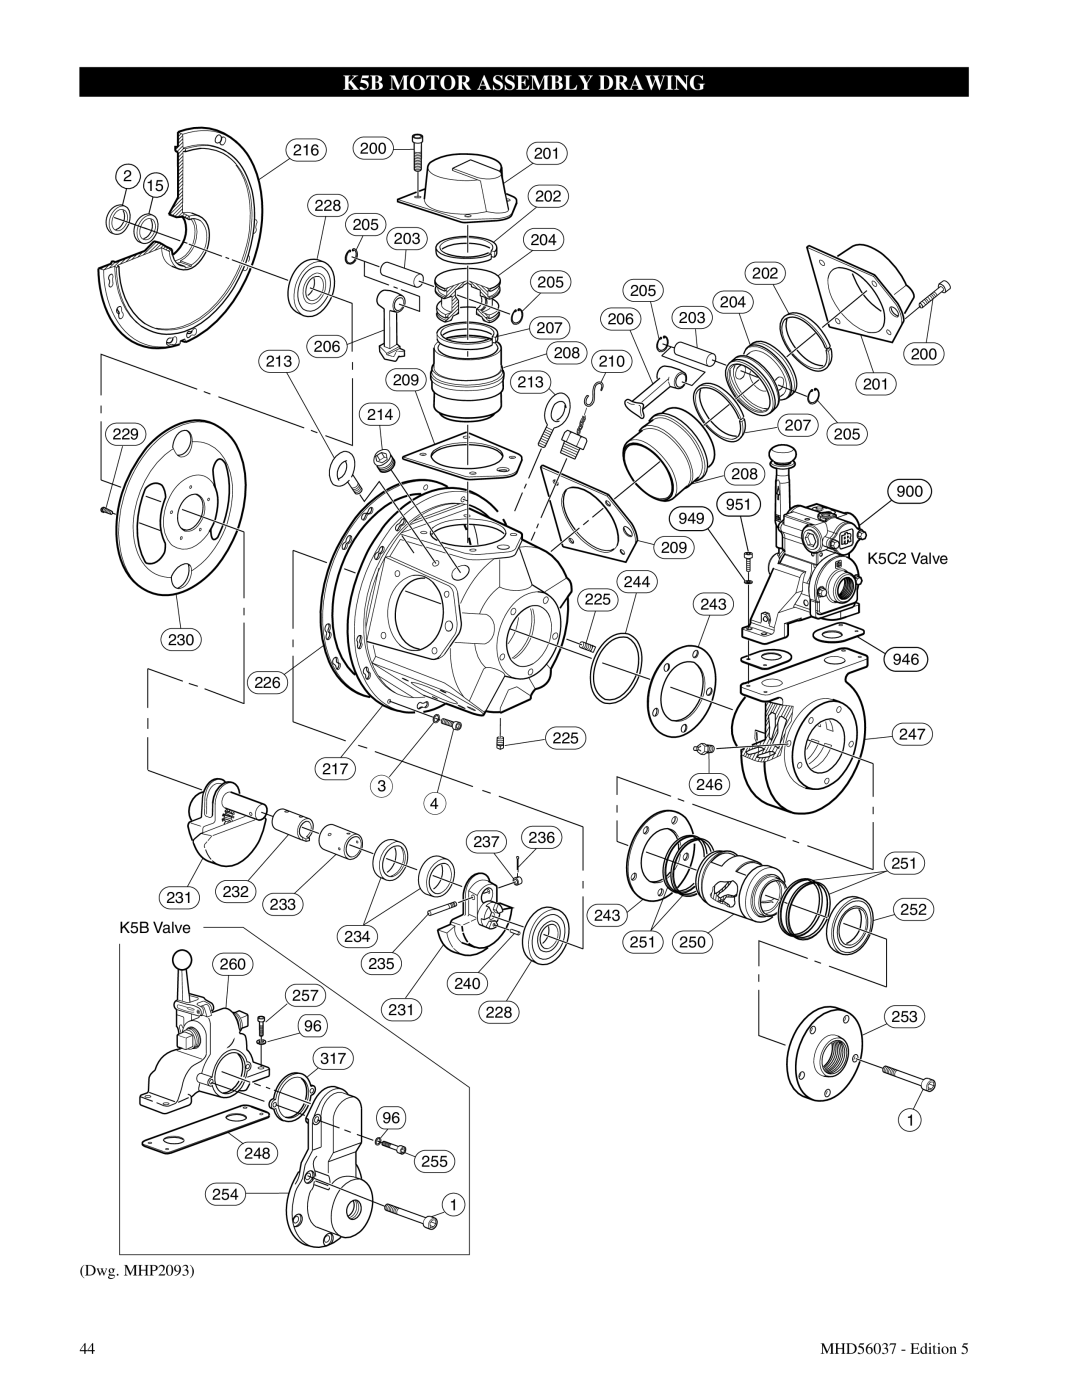 Ingersoll-Rand FA5T manual K5B MOTOR ASSEMBLY DRAWING, K5C2 Valve 